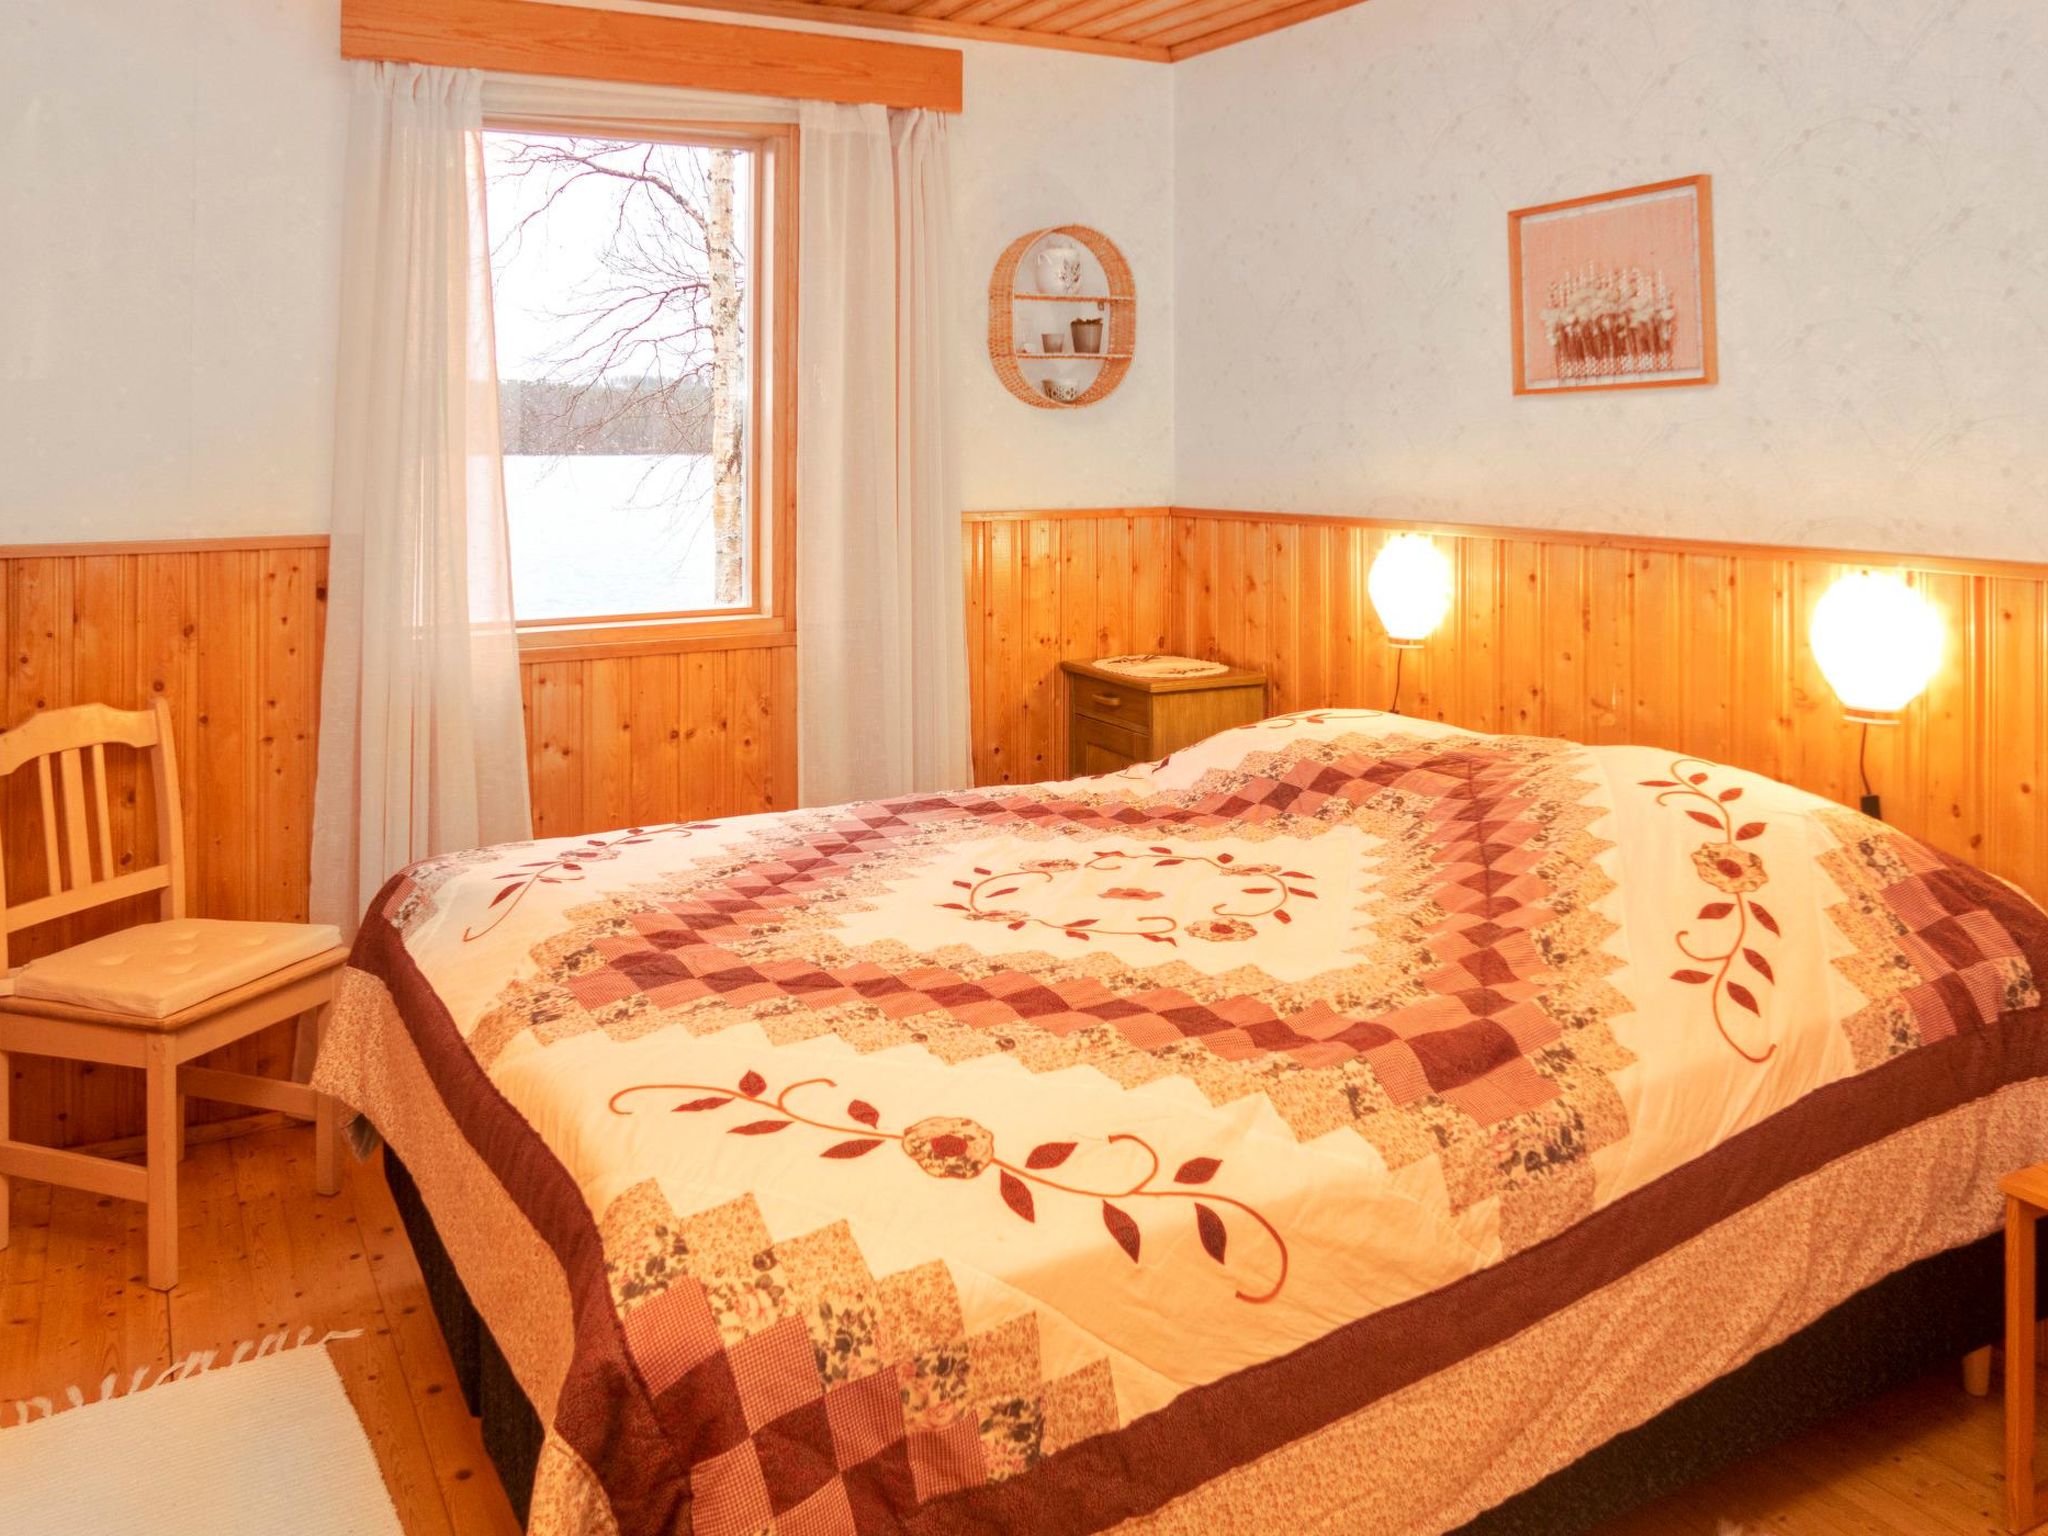 Photo 8 - 3 bedroom House in Kuusamo with sauna and mountain view